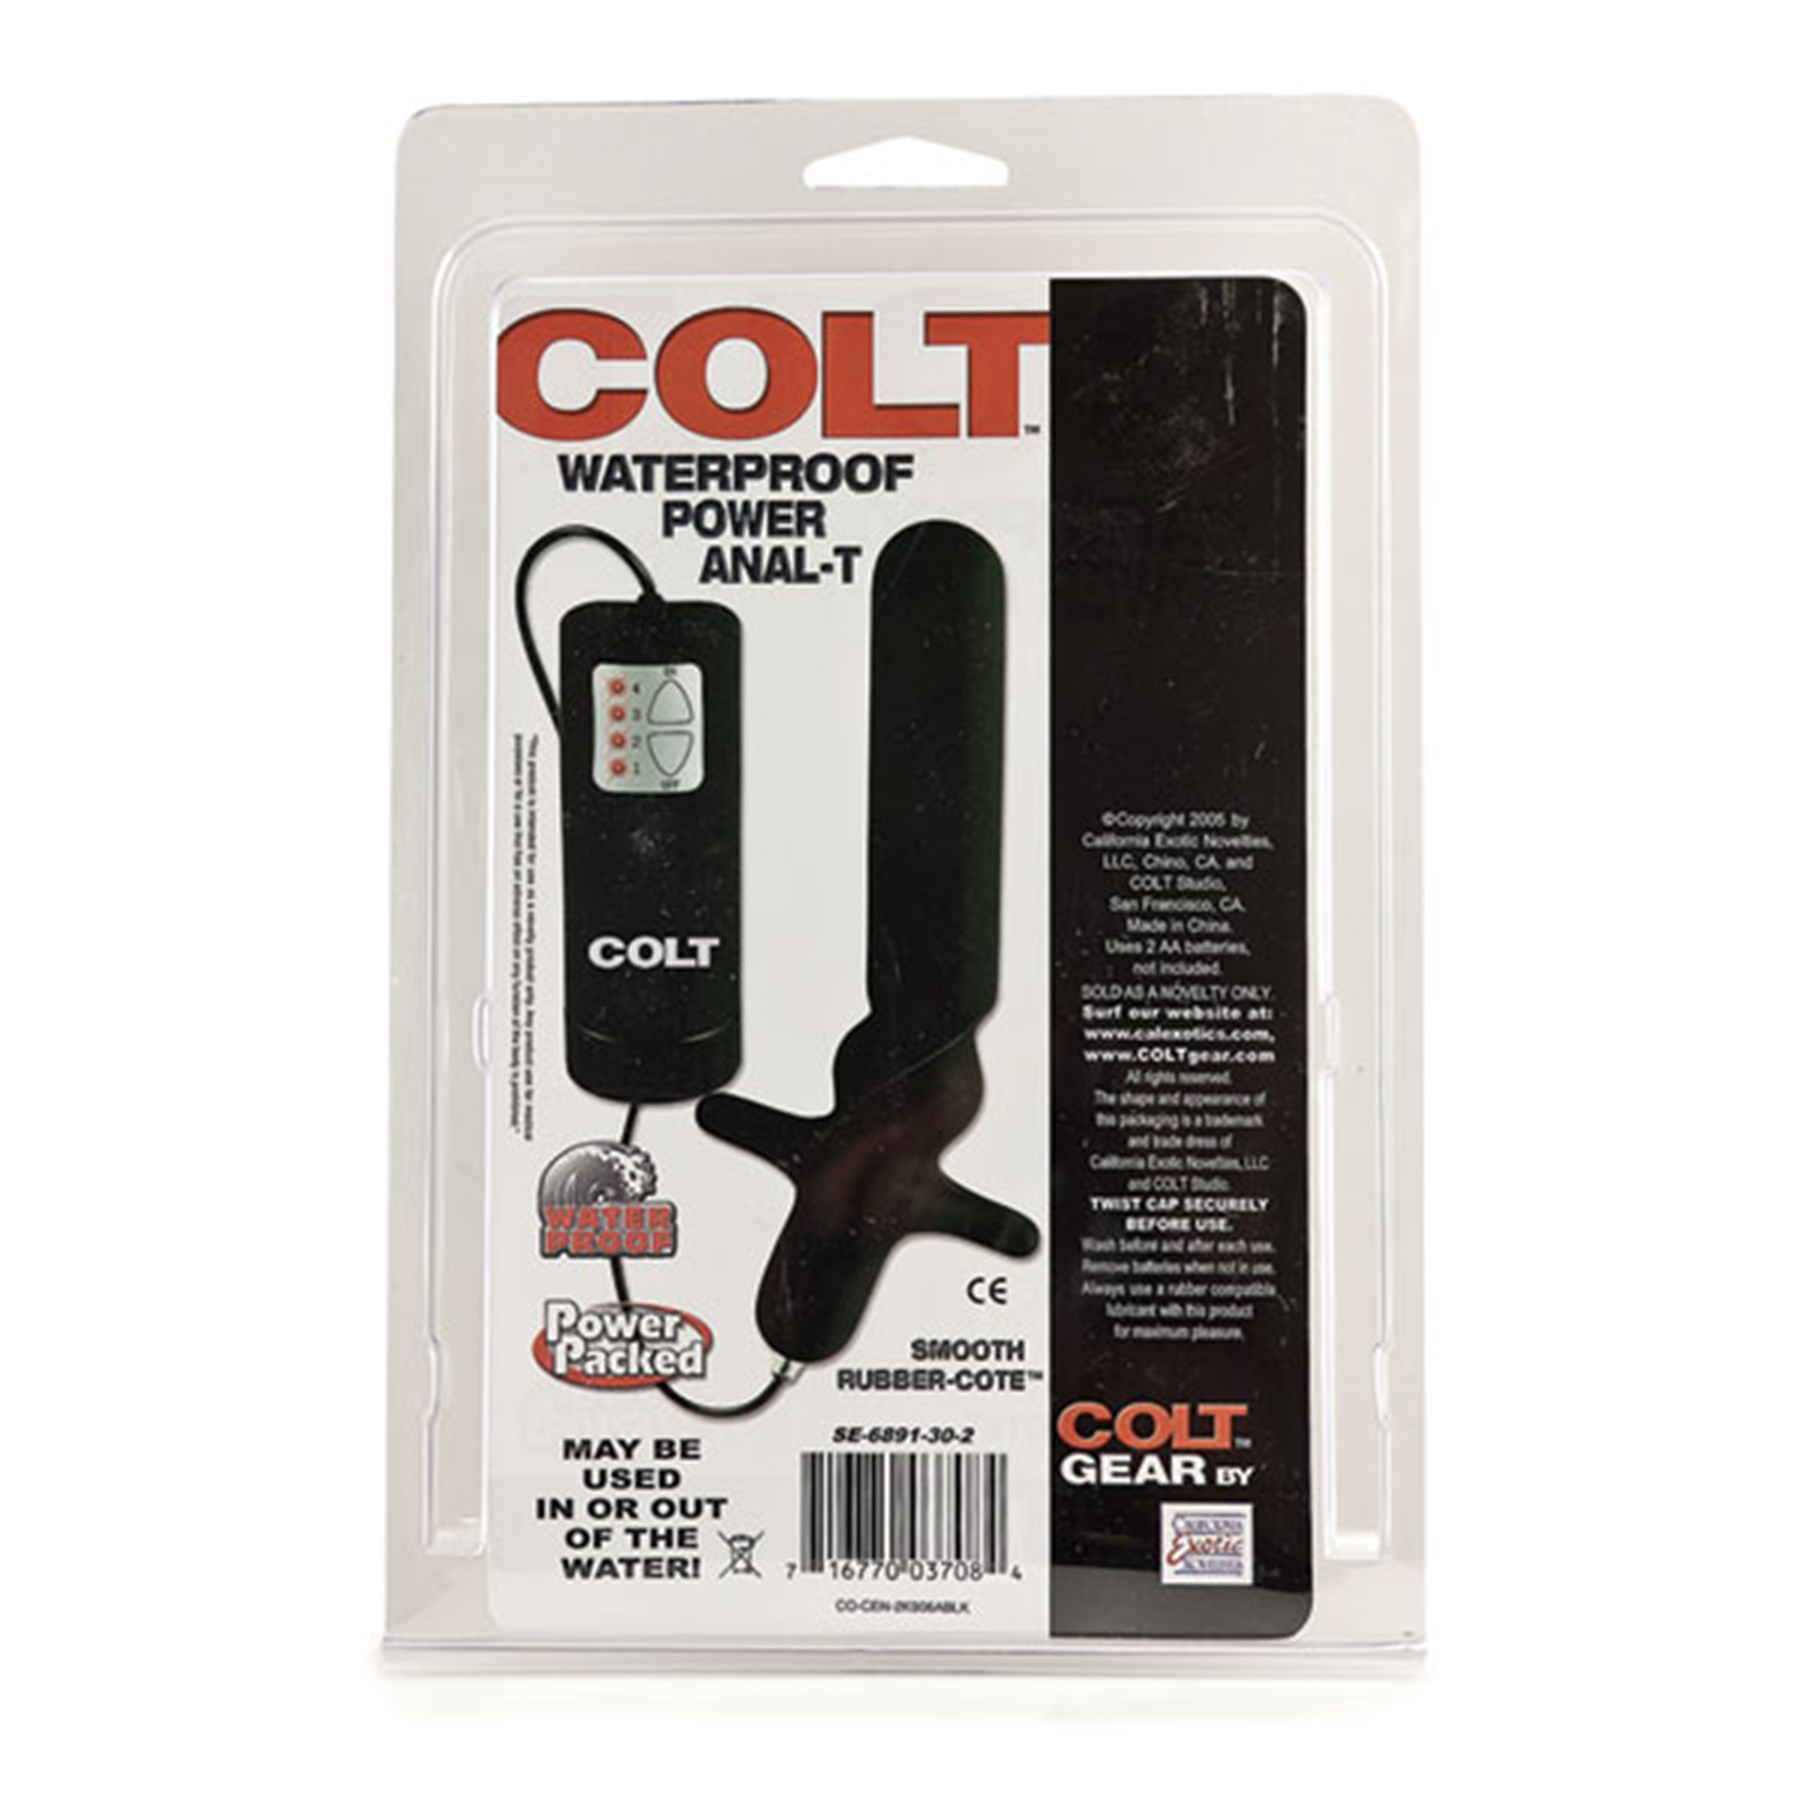 Colt Waterproof Anal T back of packaging